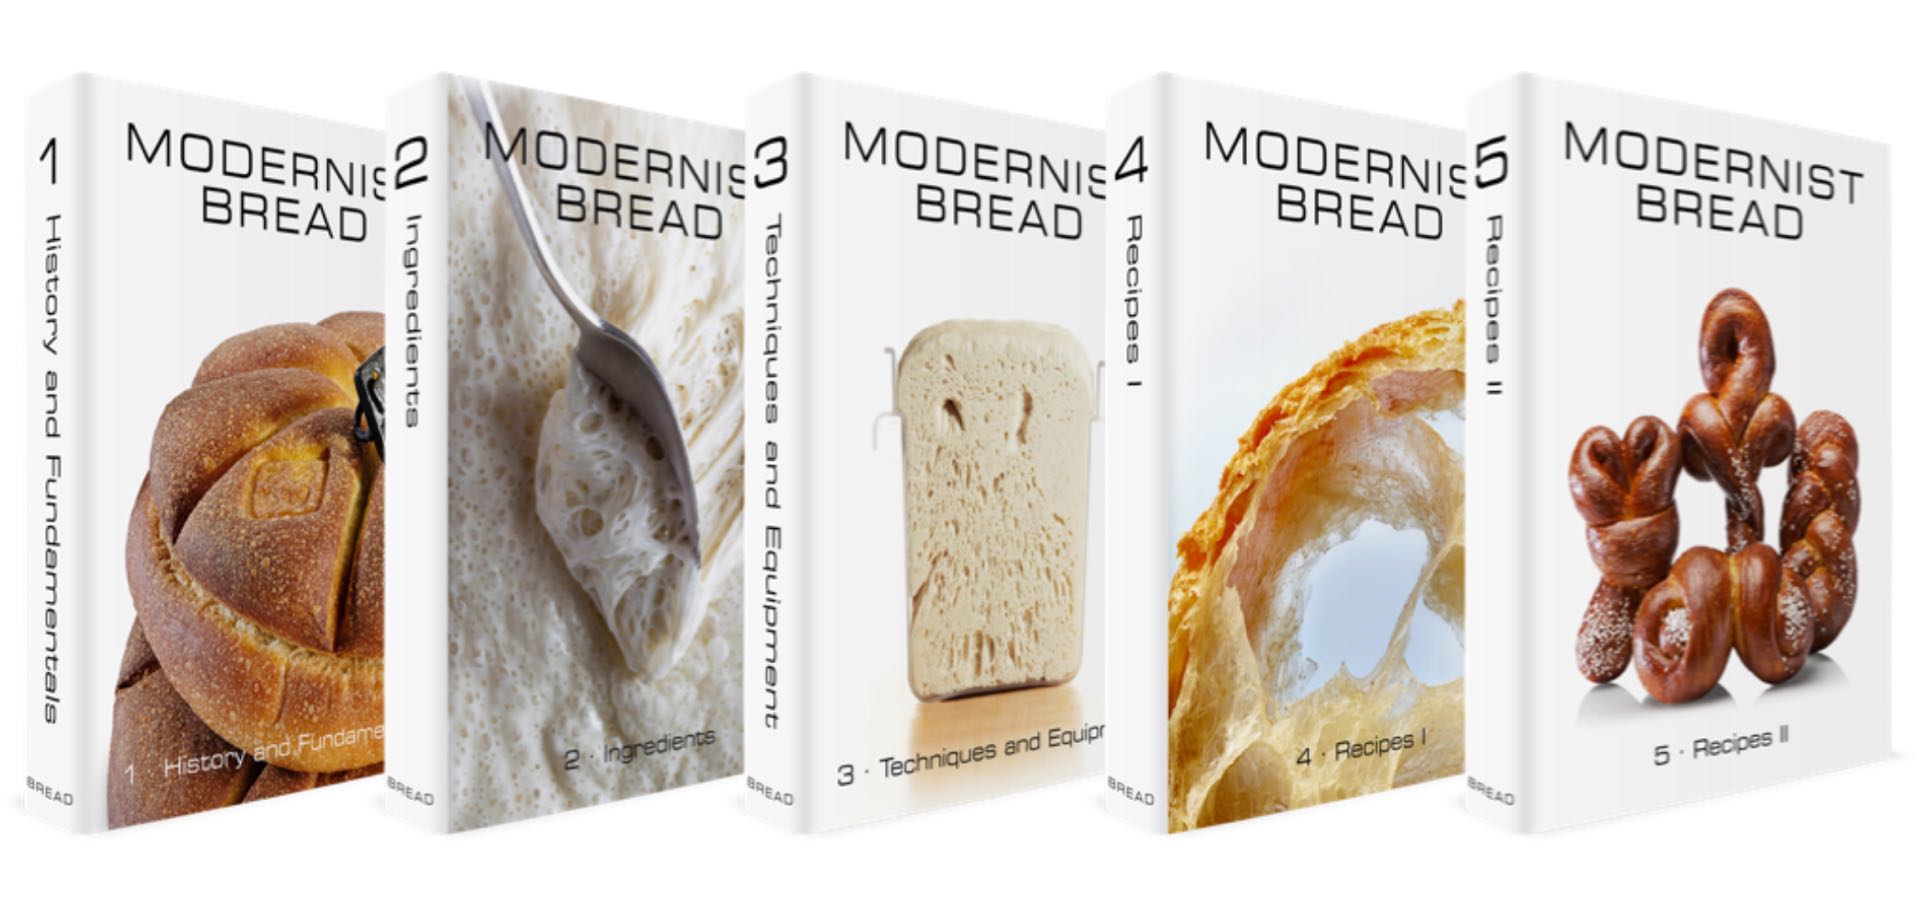 modernist-bread